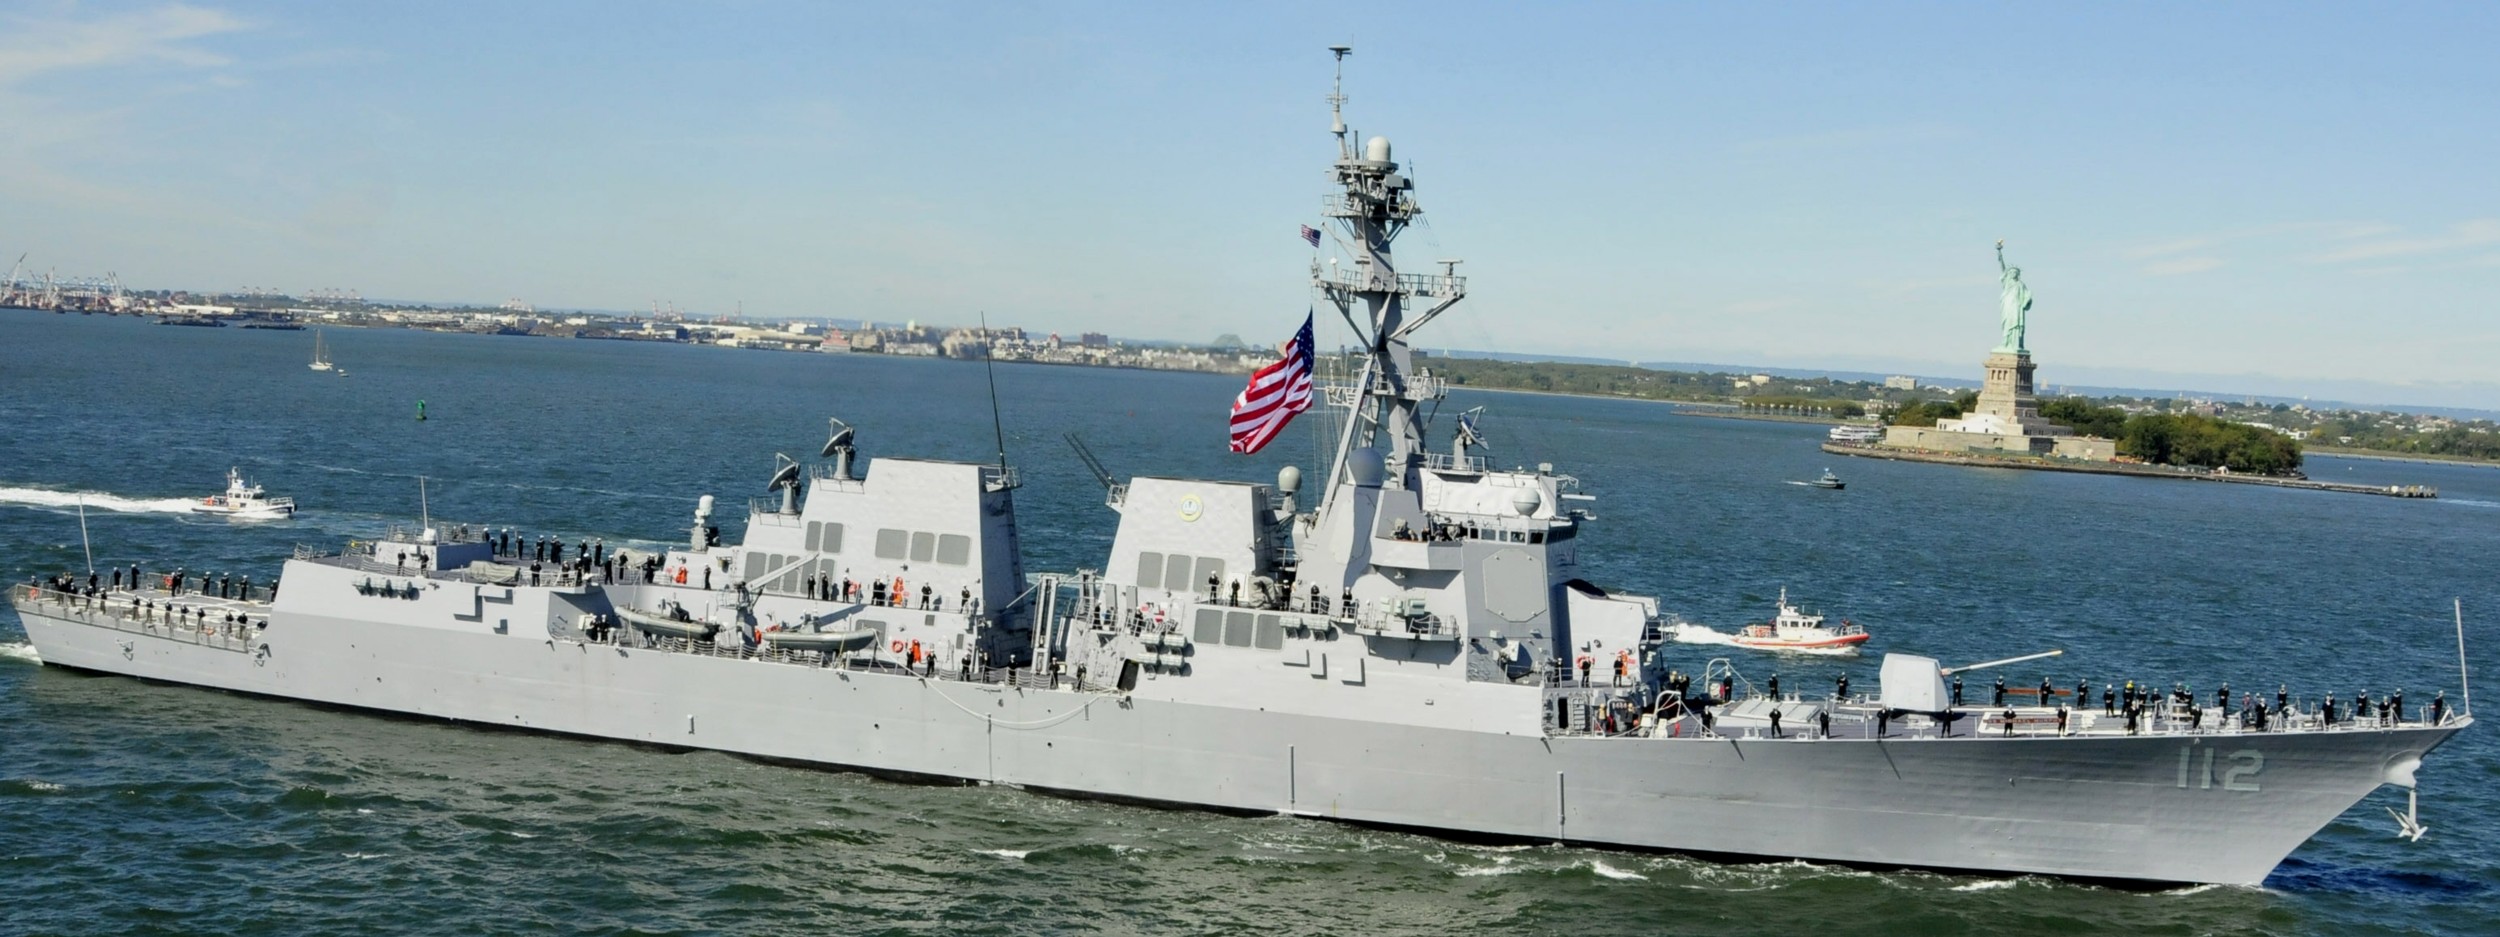 ddg-112 uss michael murphy arleigh burke class guided missile destroyer aegis us navy new york 04